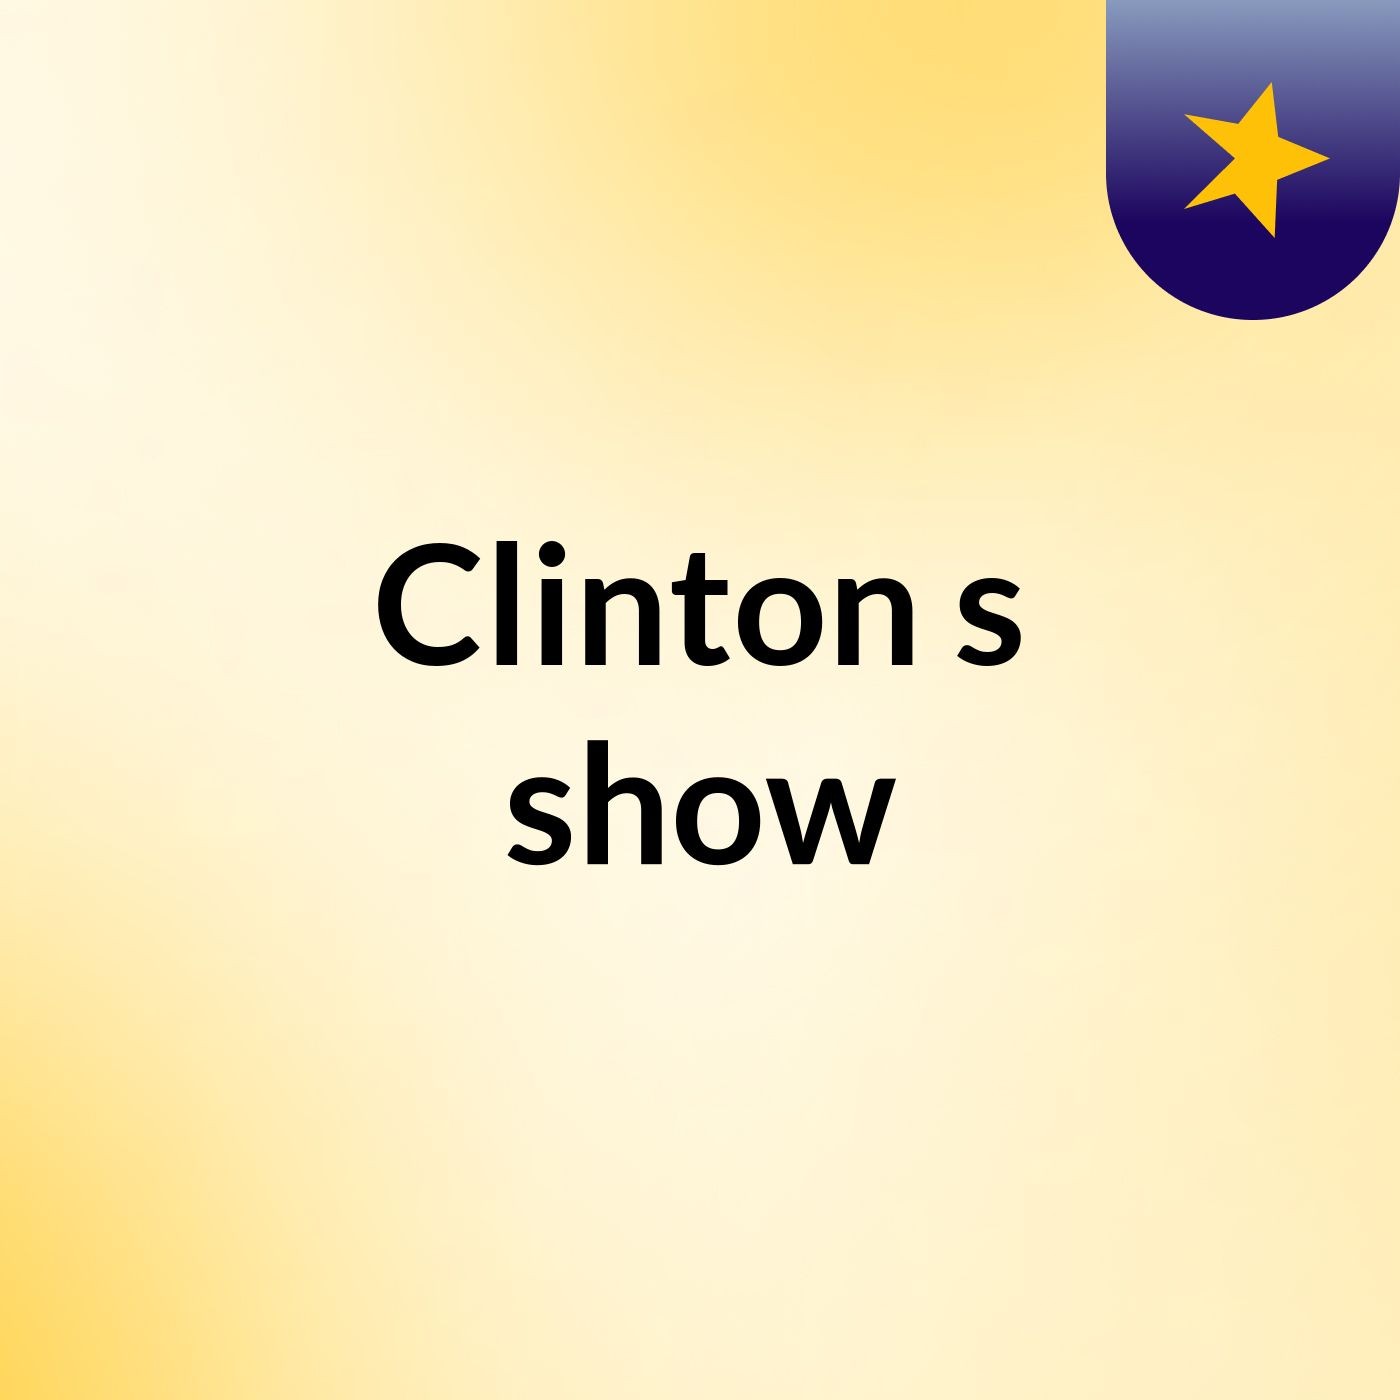 Clinton's show